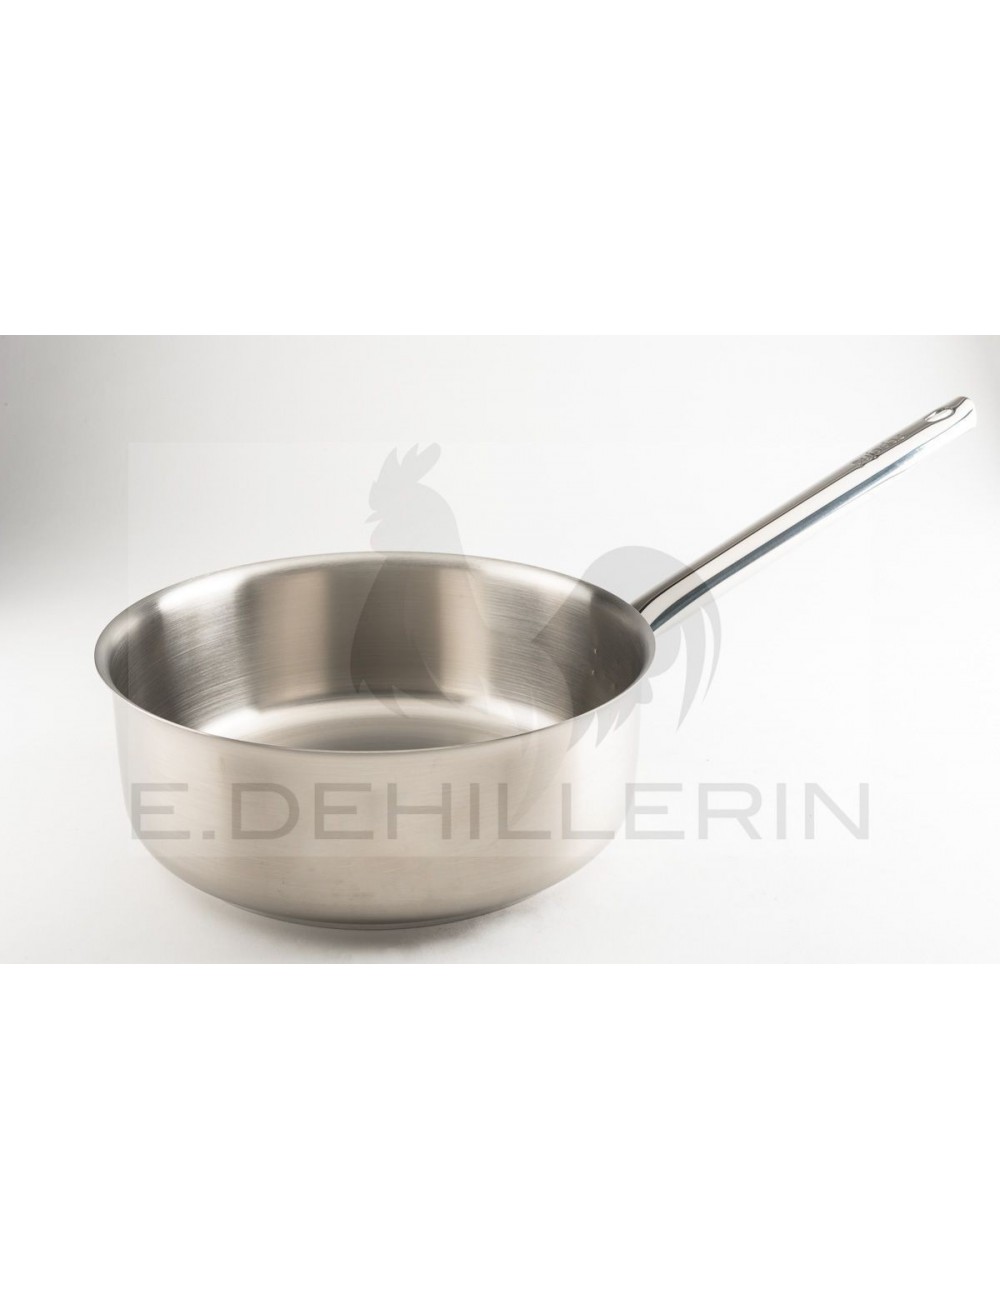 https://www.edehillerin.fr/692-large_default/saucepan-pro-stainless-steel.jpg